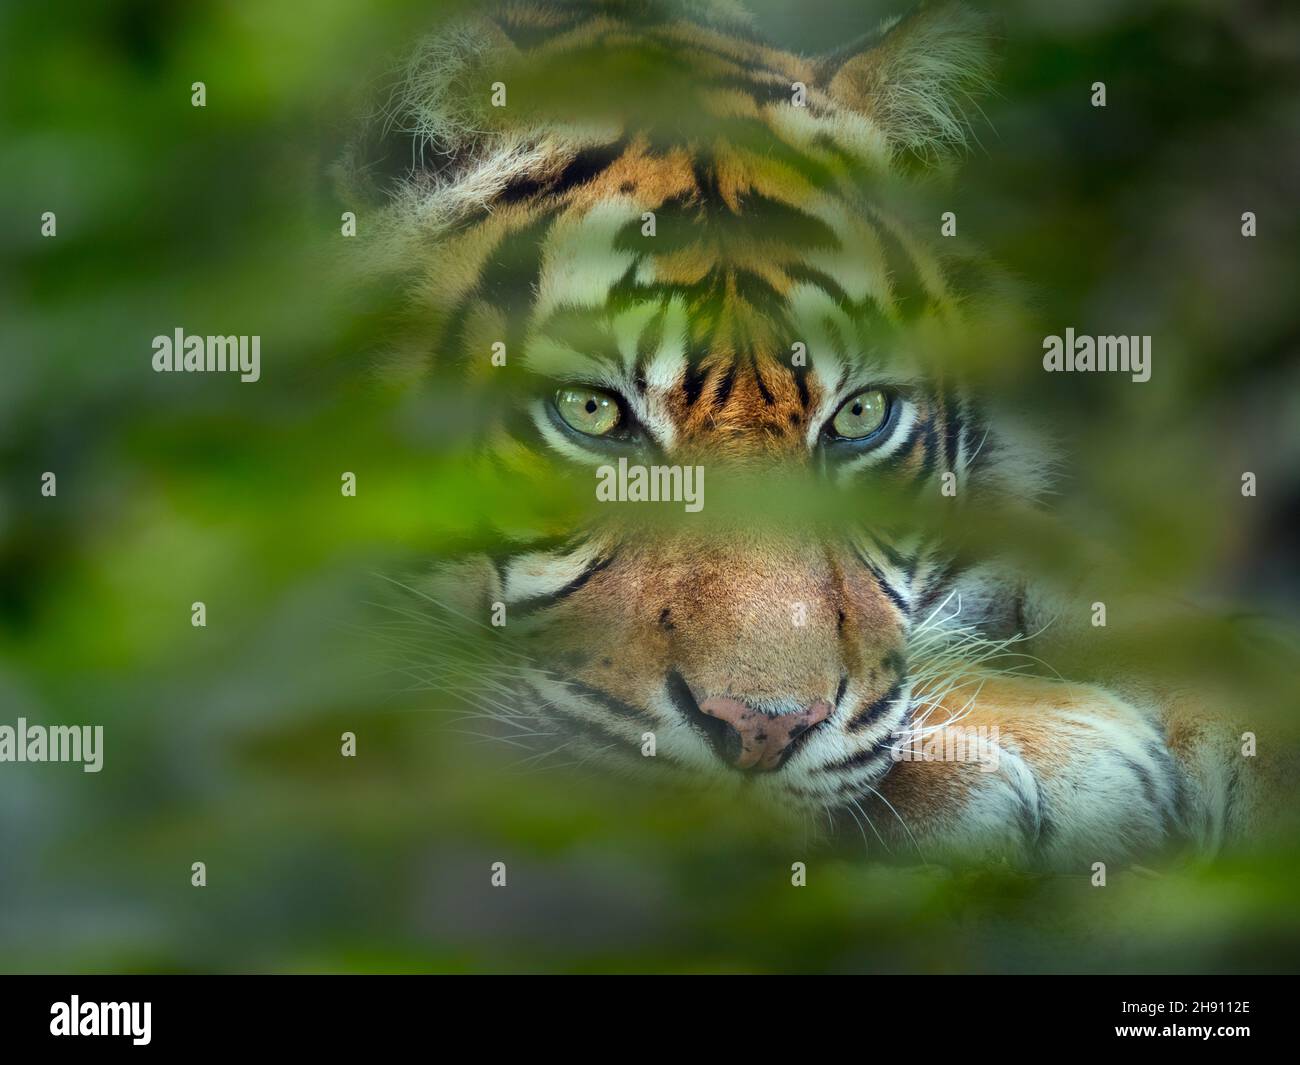 Tigre de Sumatra Panthera tigris sondaica Foto de stock